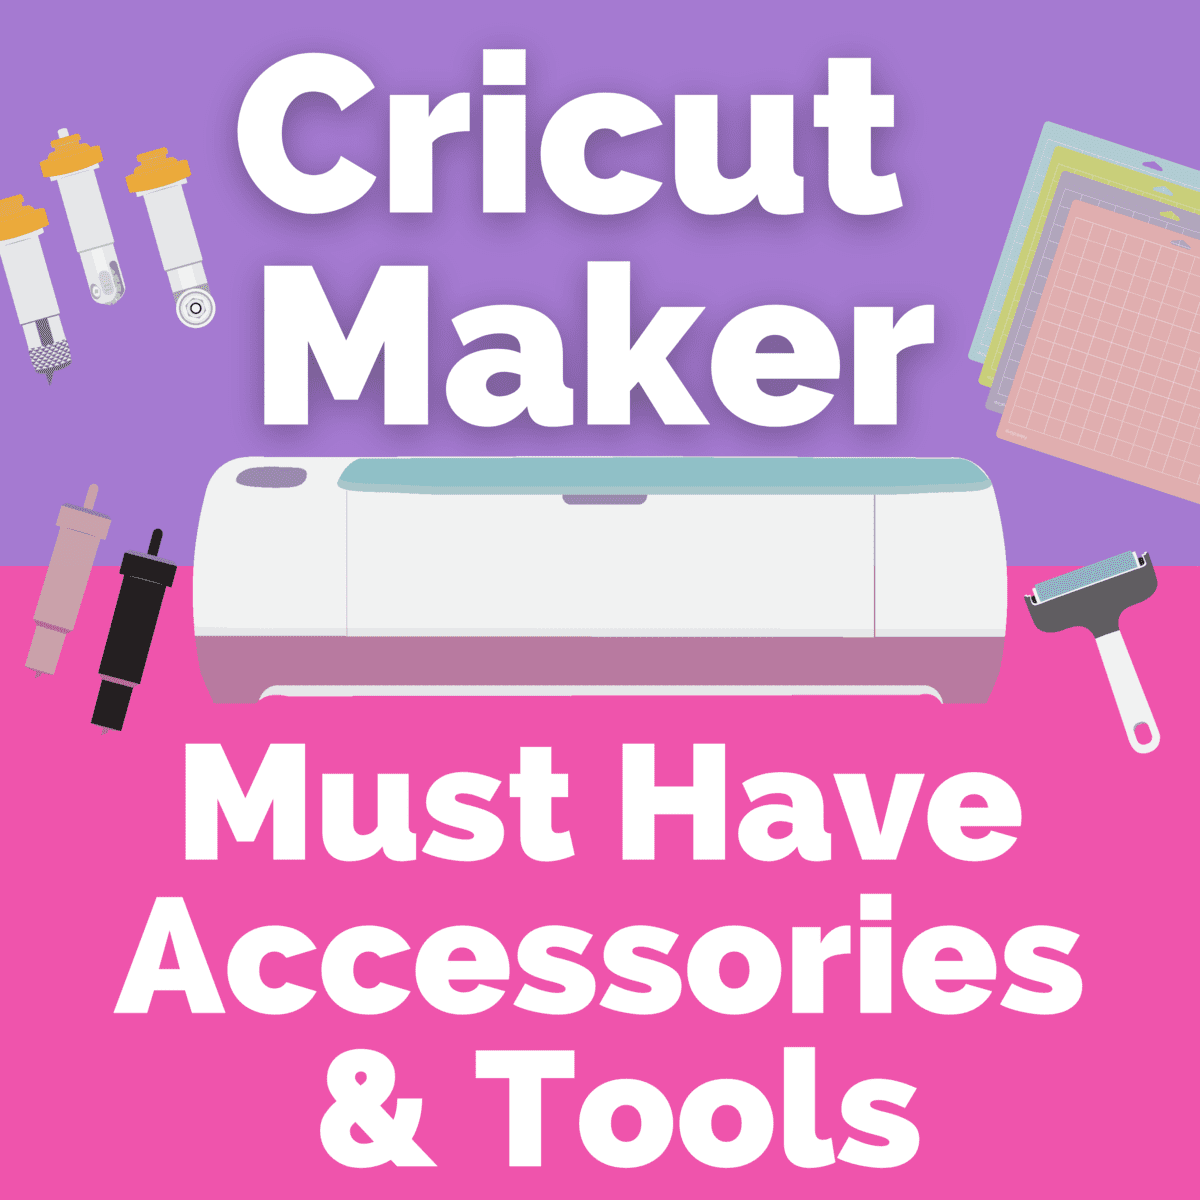 Cricut Tools and Accessories